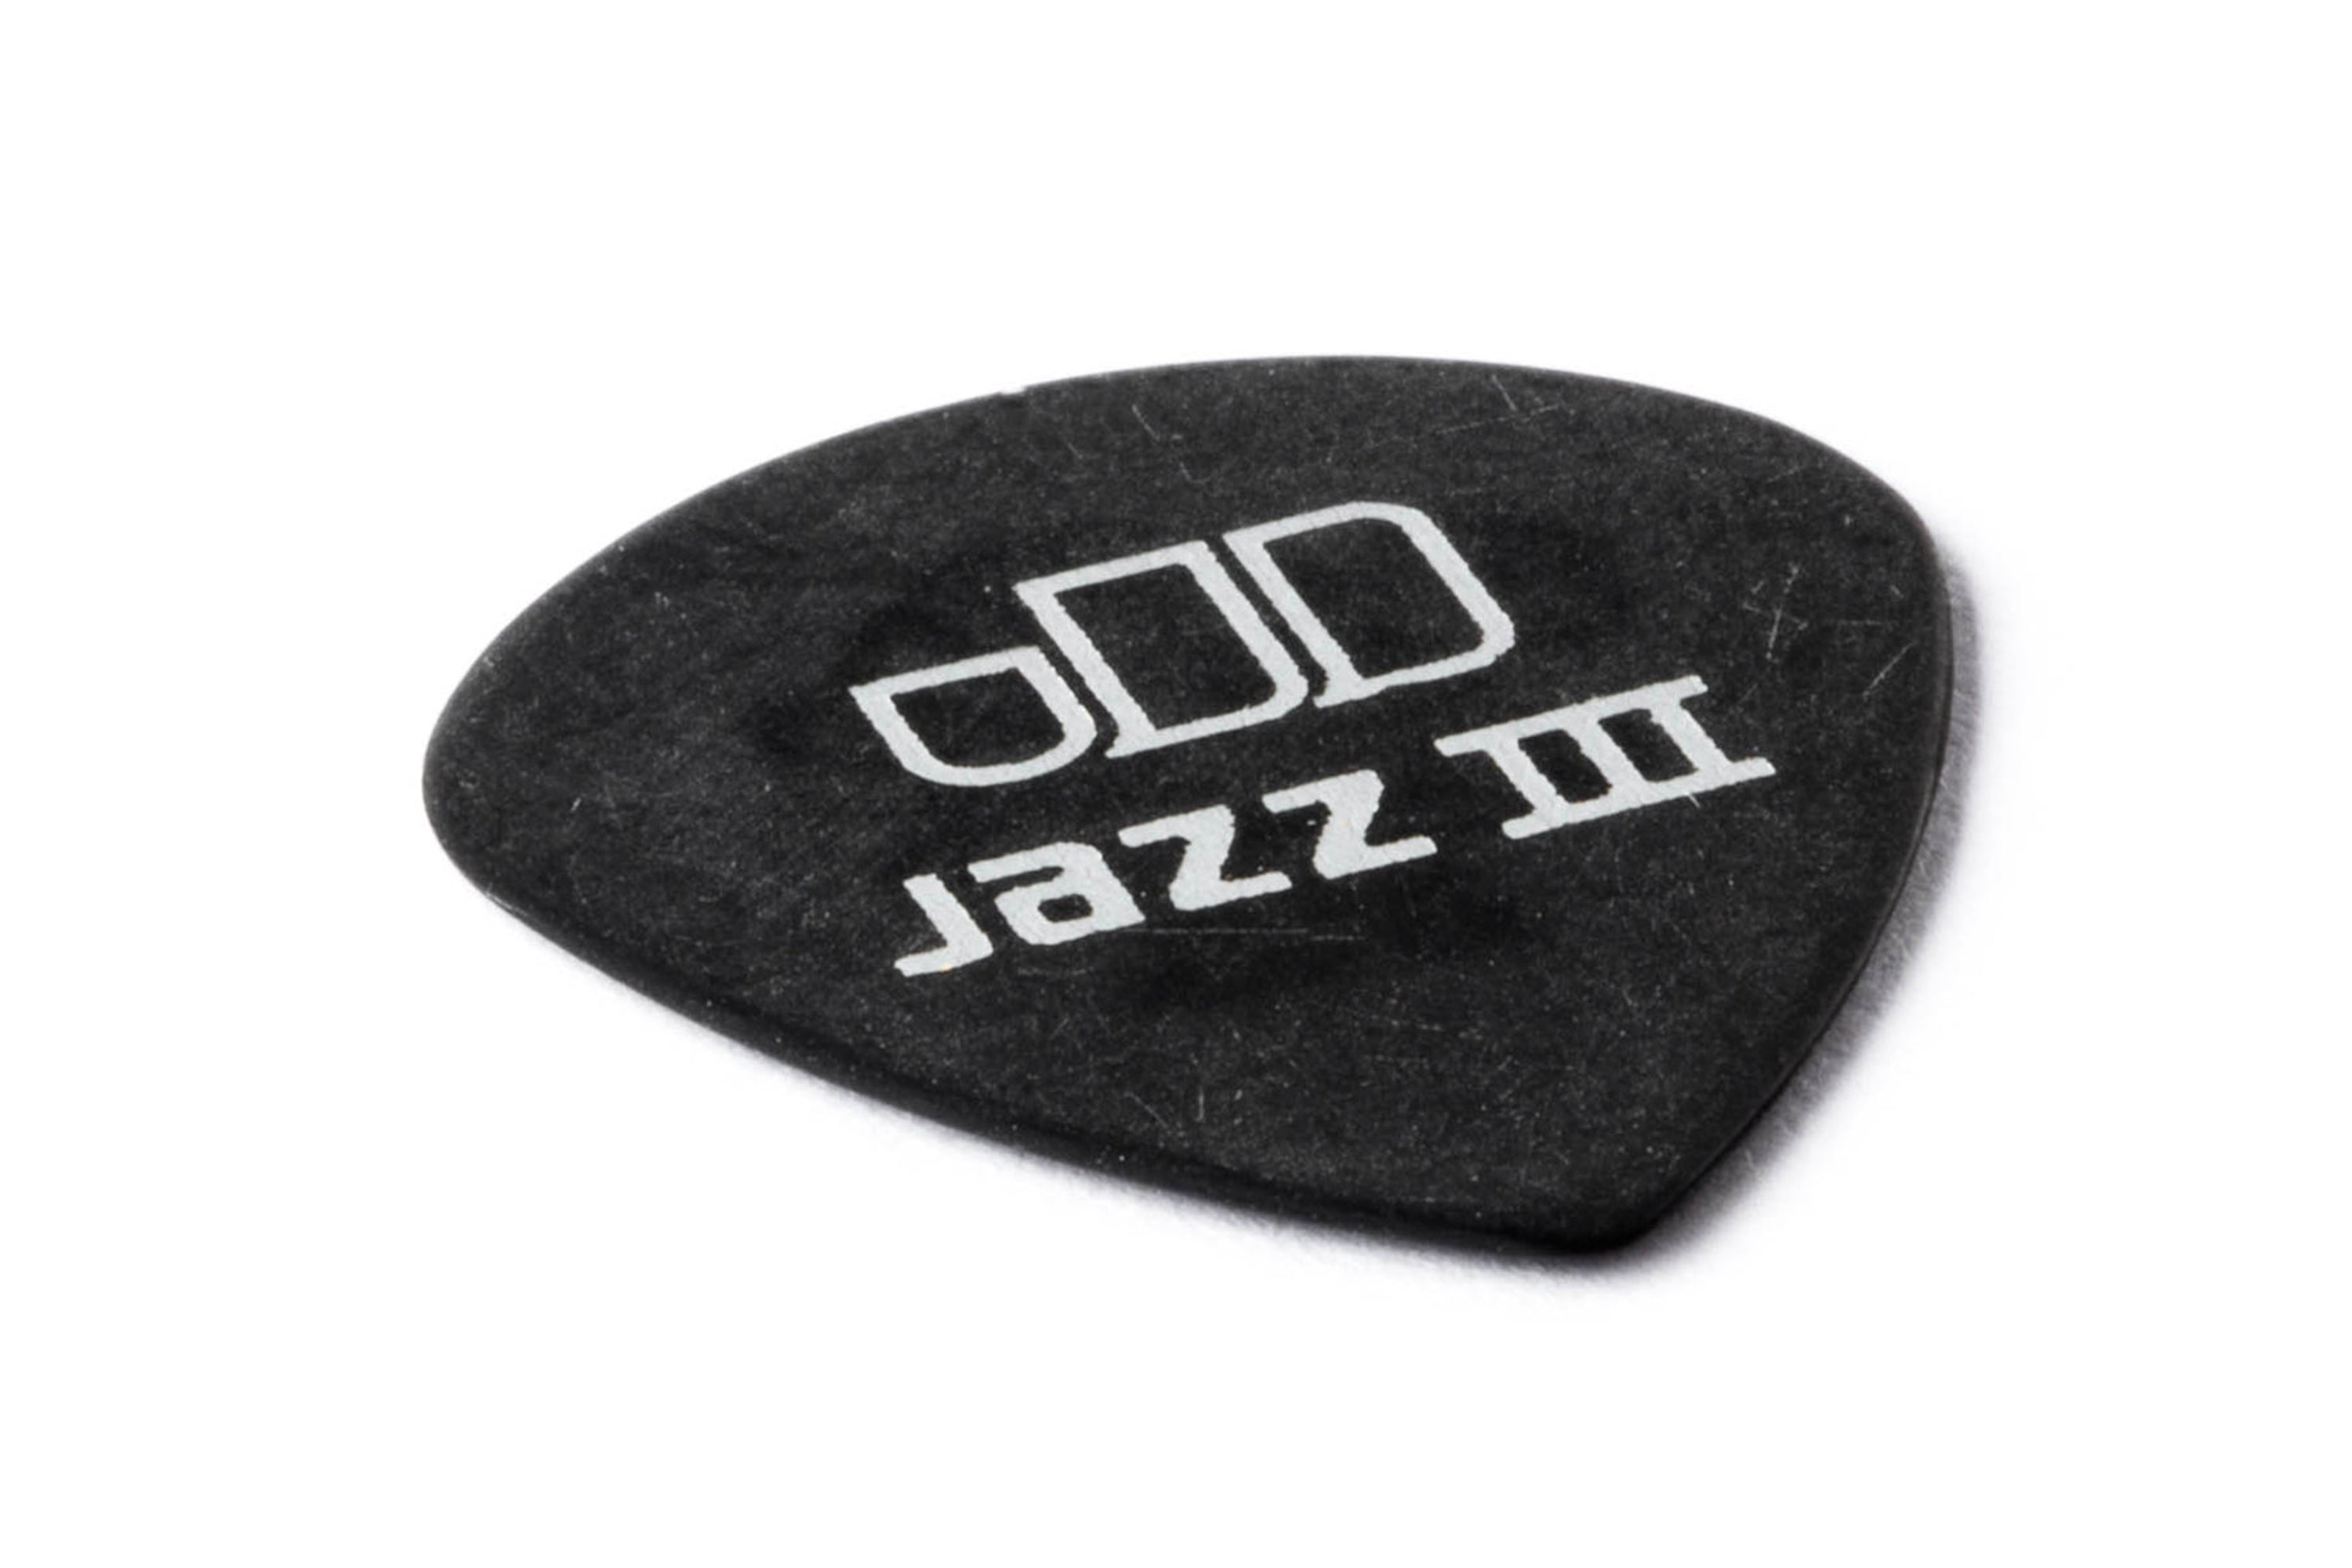 Dunlop Tortex® Jazz III Picks